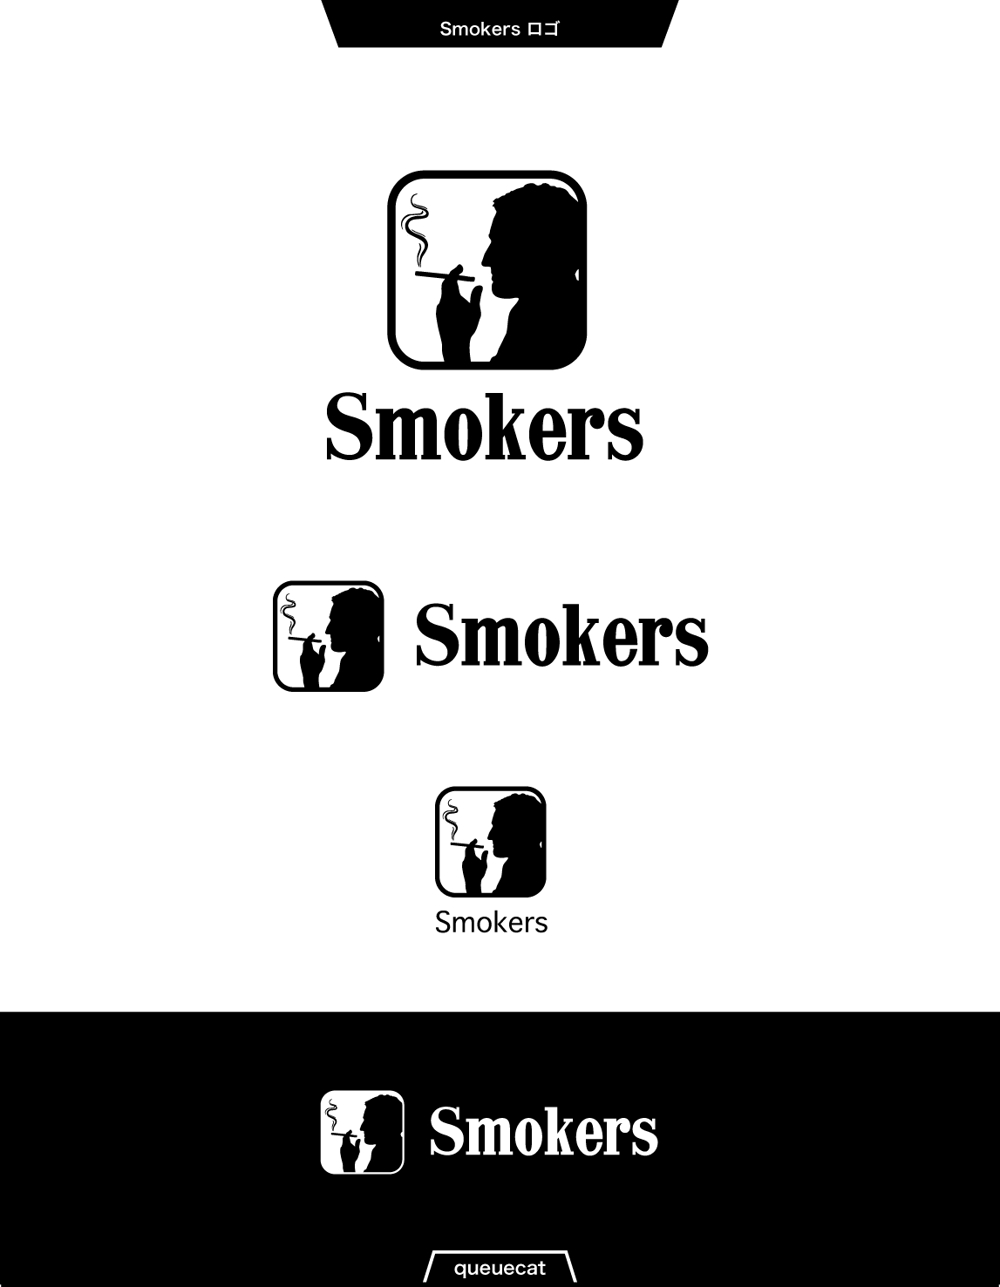 Smokers1_1.jpg